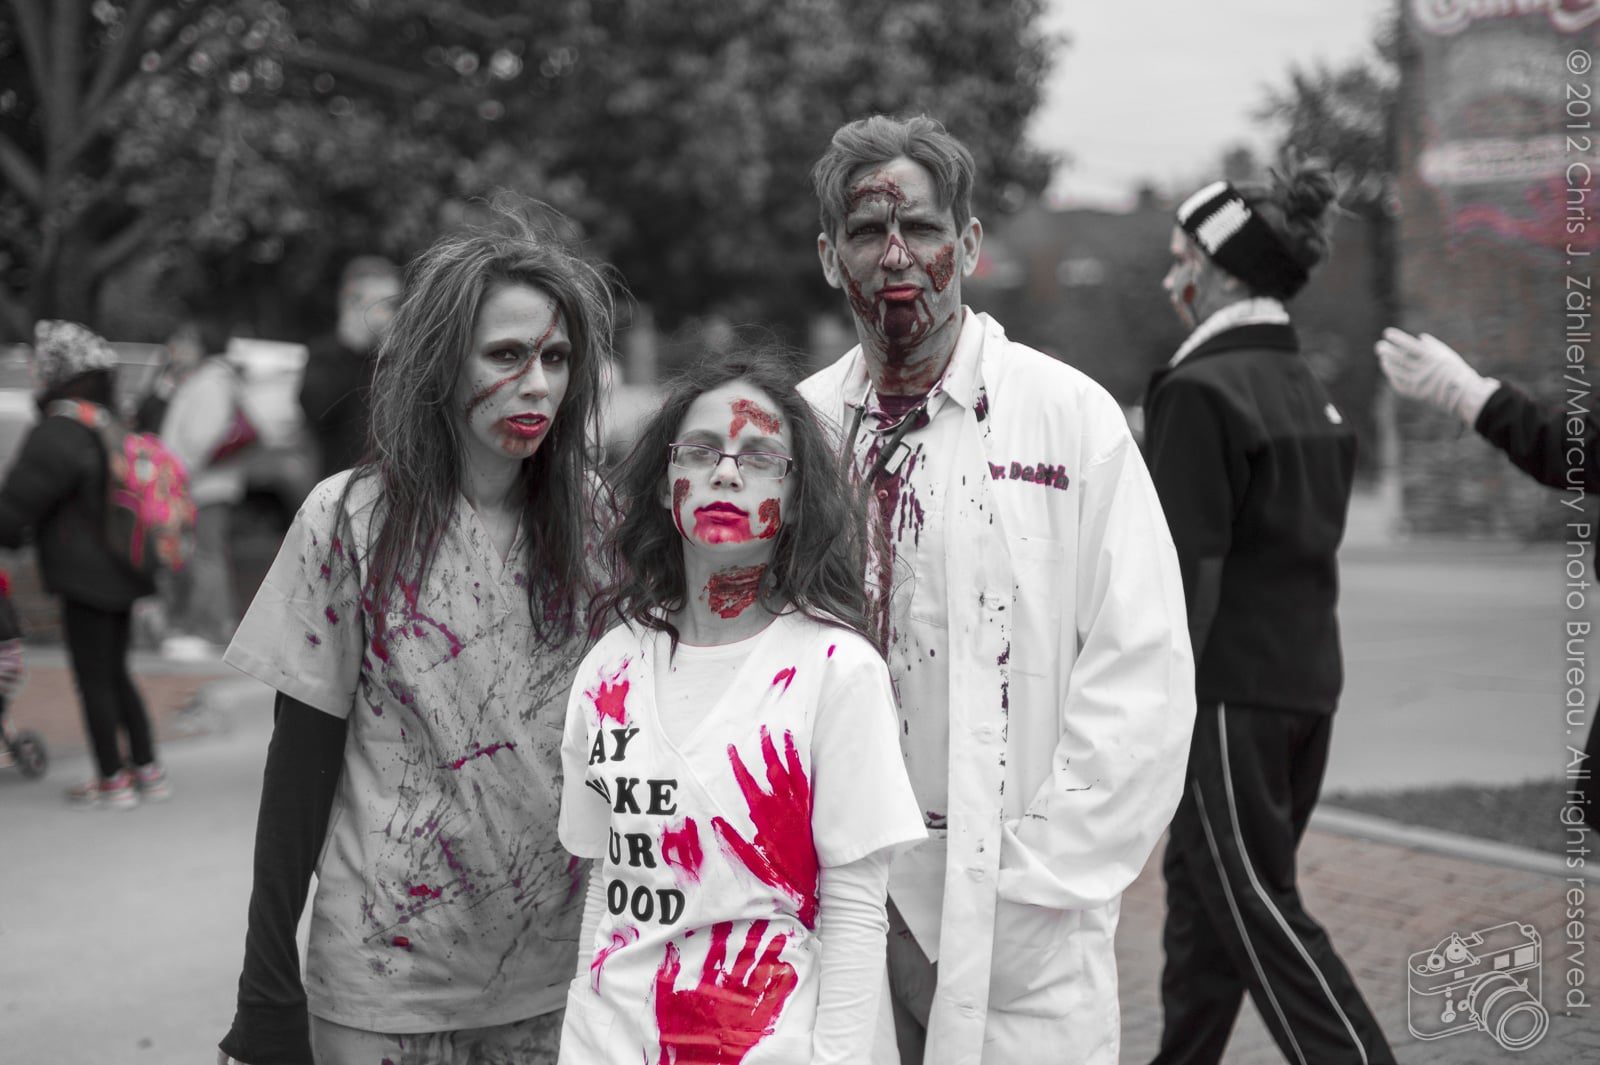 Hospital Zombies (I) — Oklahoma’s Premier Zombie Race: Zombie Bolt 5K, Guthrie, Oklahoma